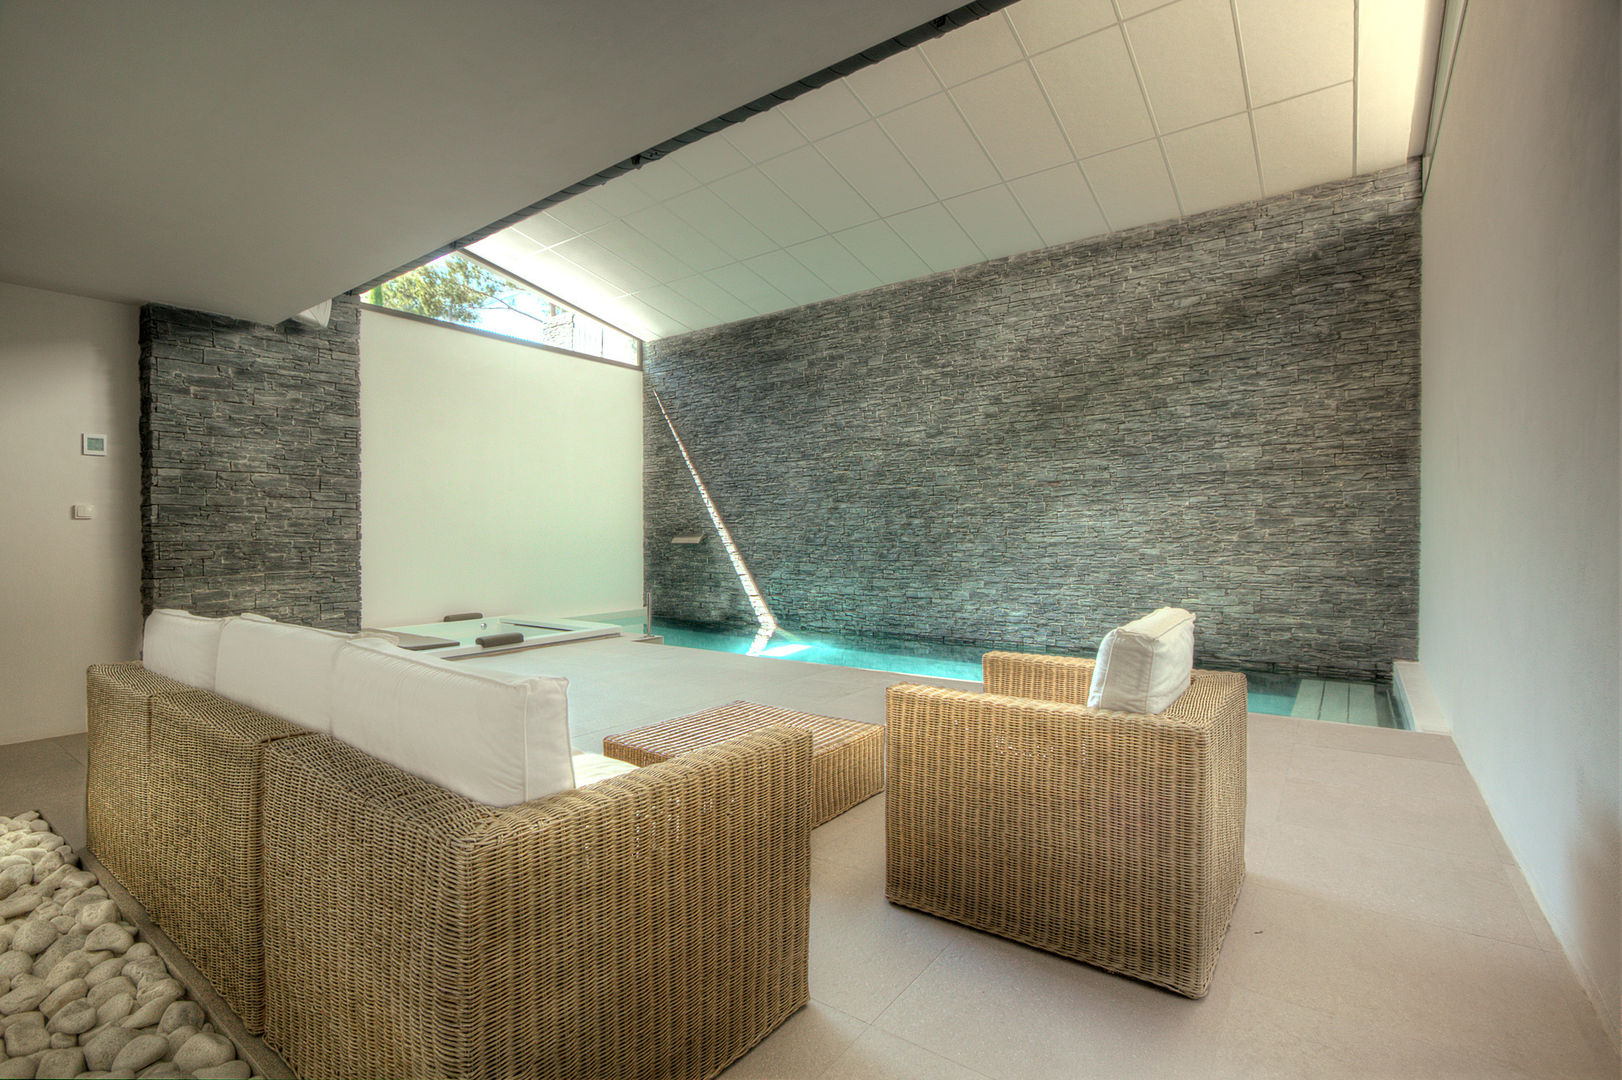 Piscina interior cubierta con spa, Gunitec Concept Pools Gunitec Concept Pools Piscinas